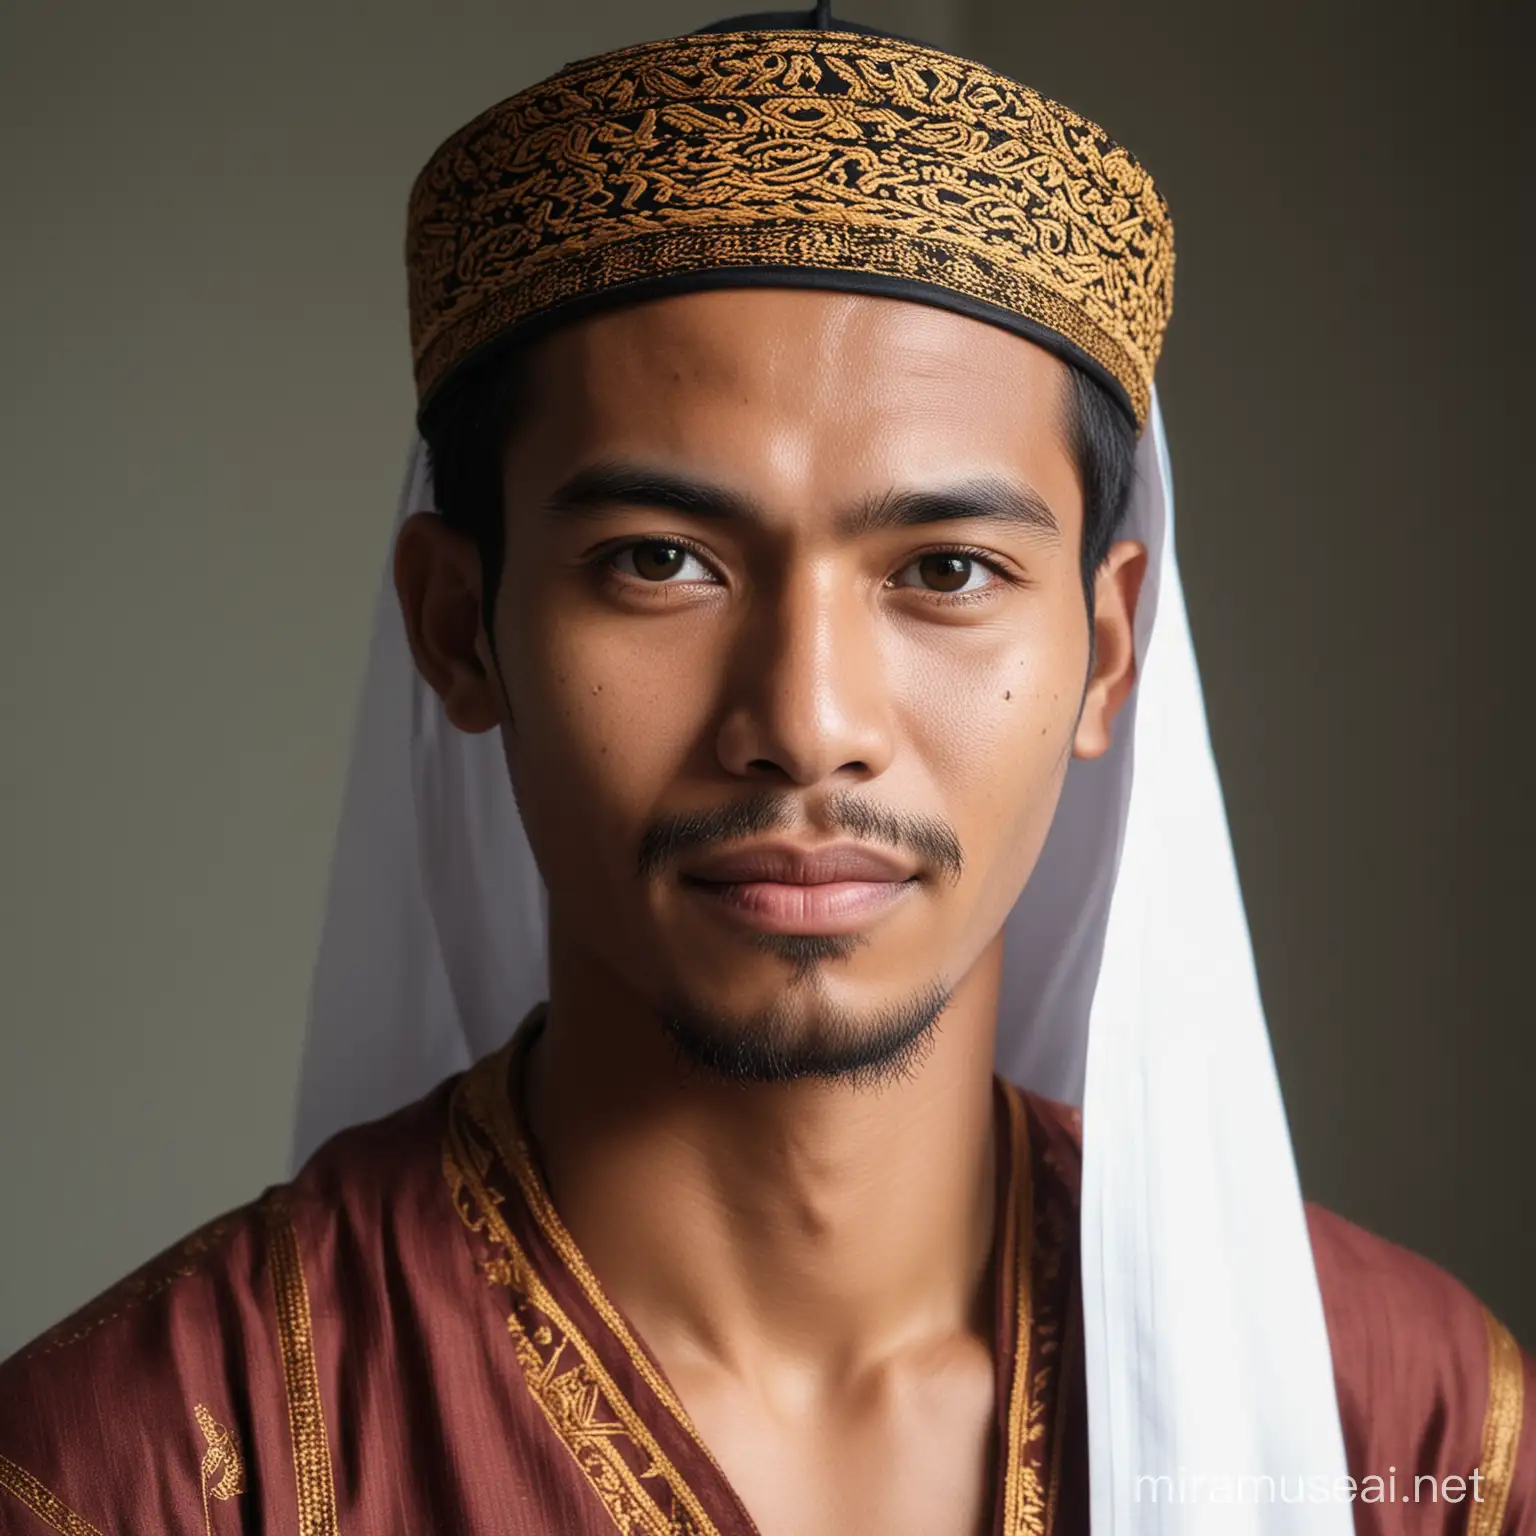 Traditional Malay Man in Cultural Attire